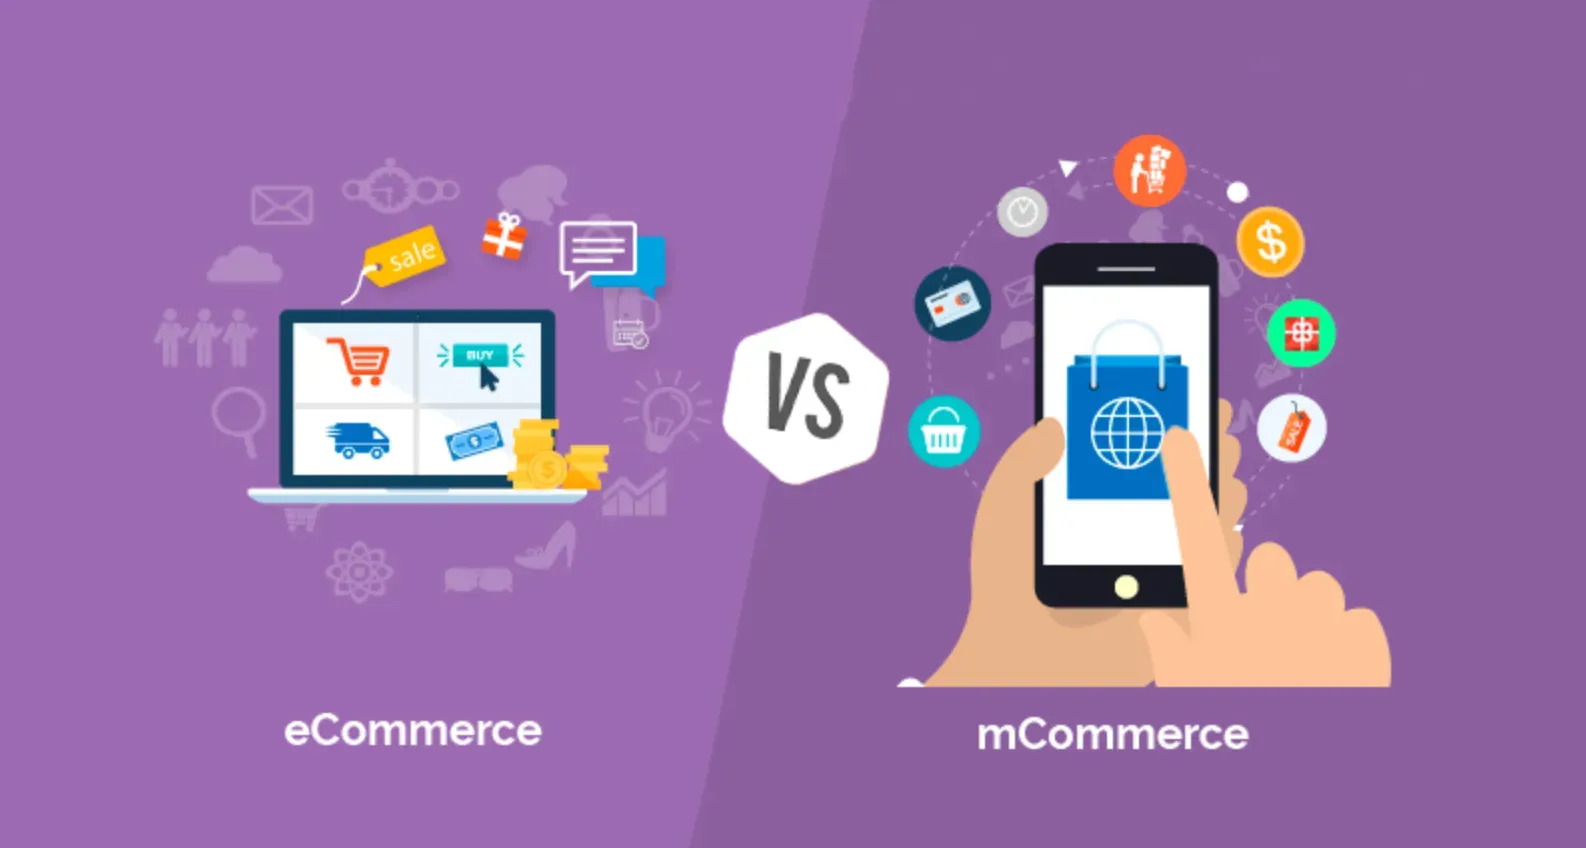 eCommerce vs mCommerce